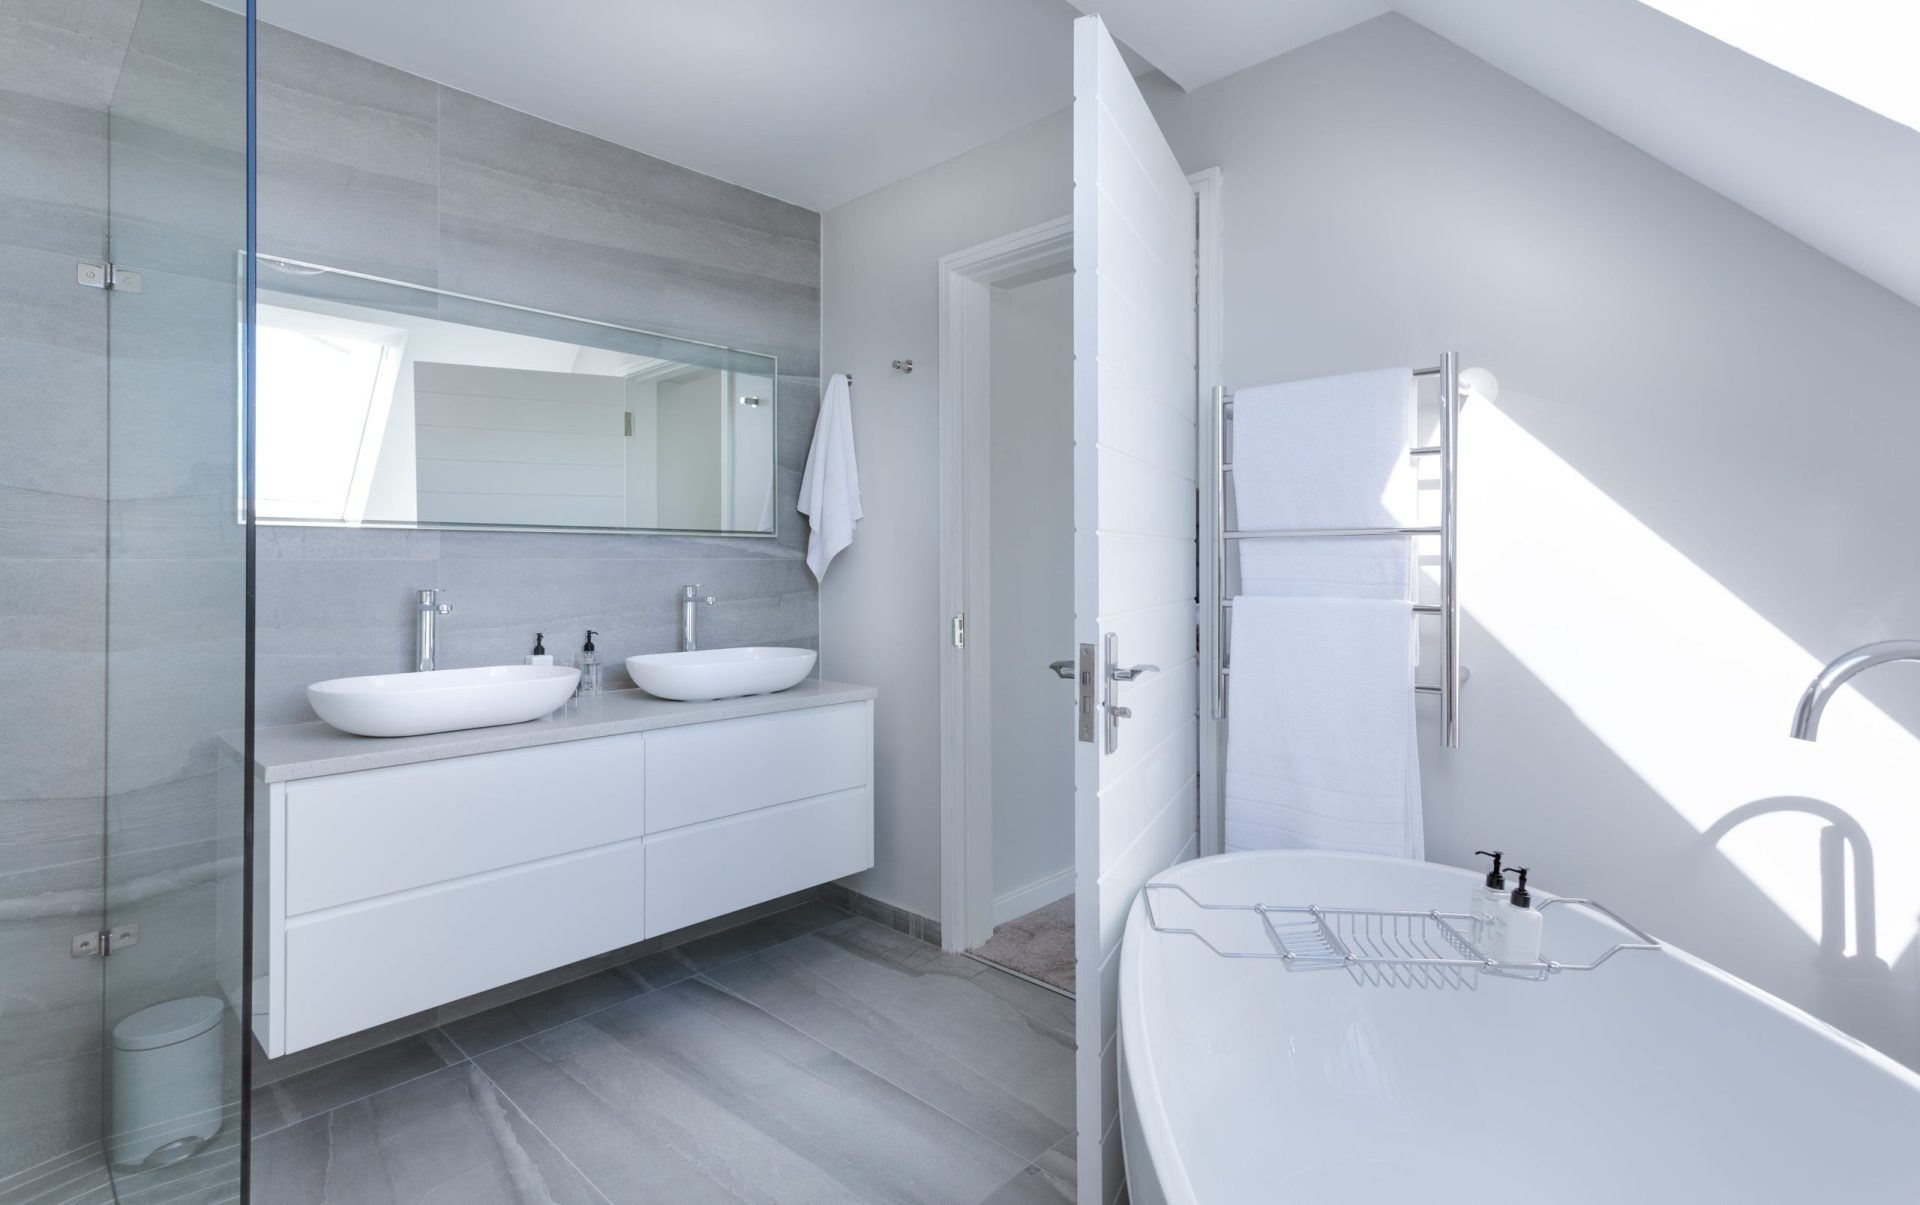 9 Tips For a More Aesthetically Pleasing Bathroom Design